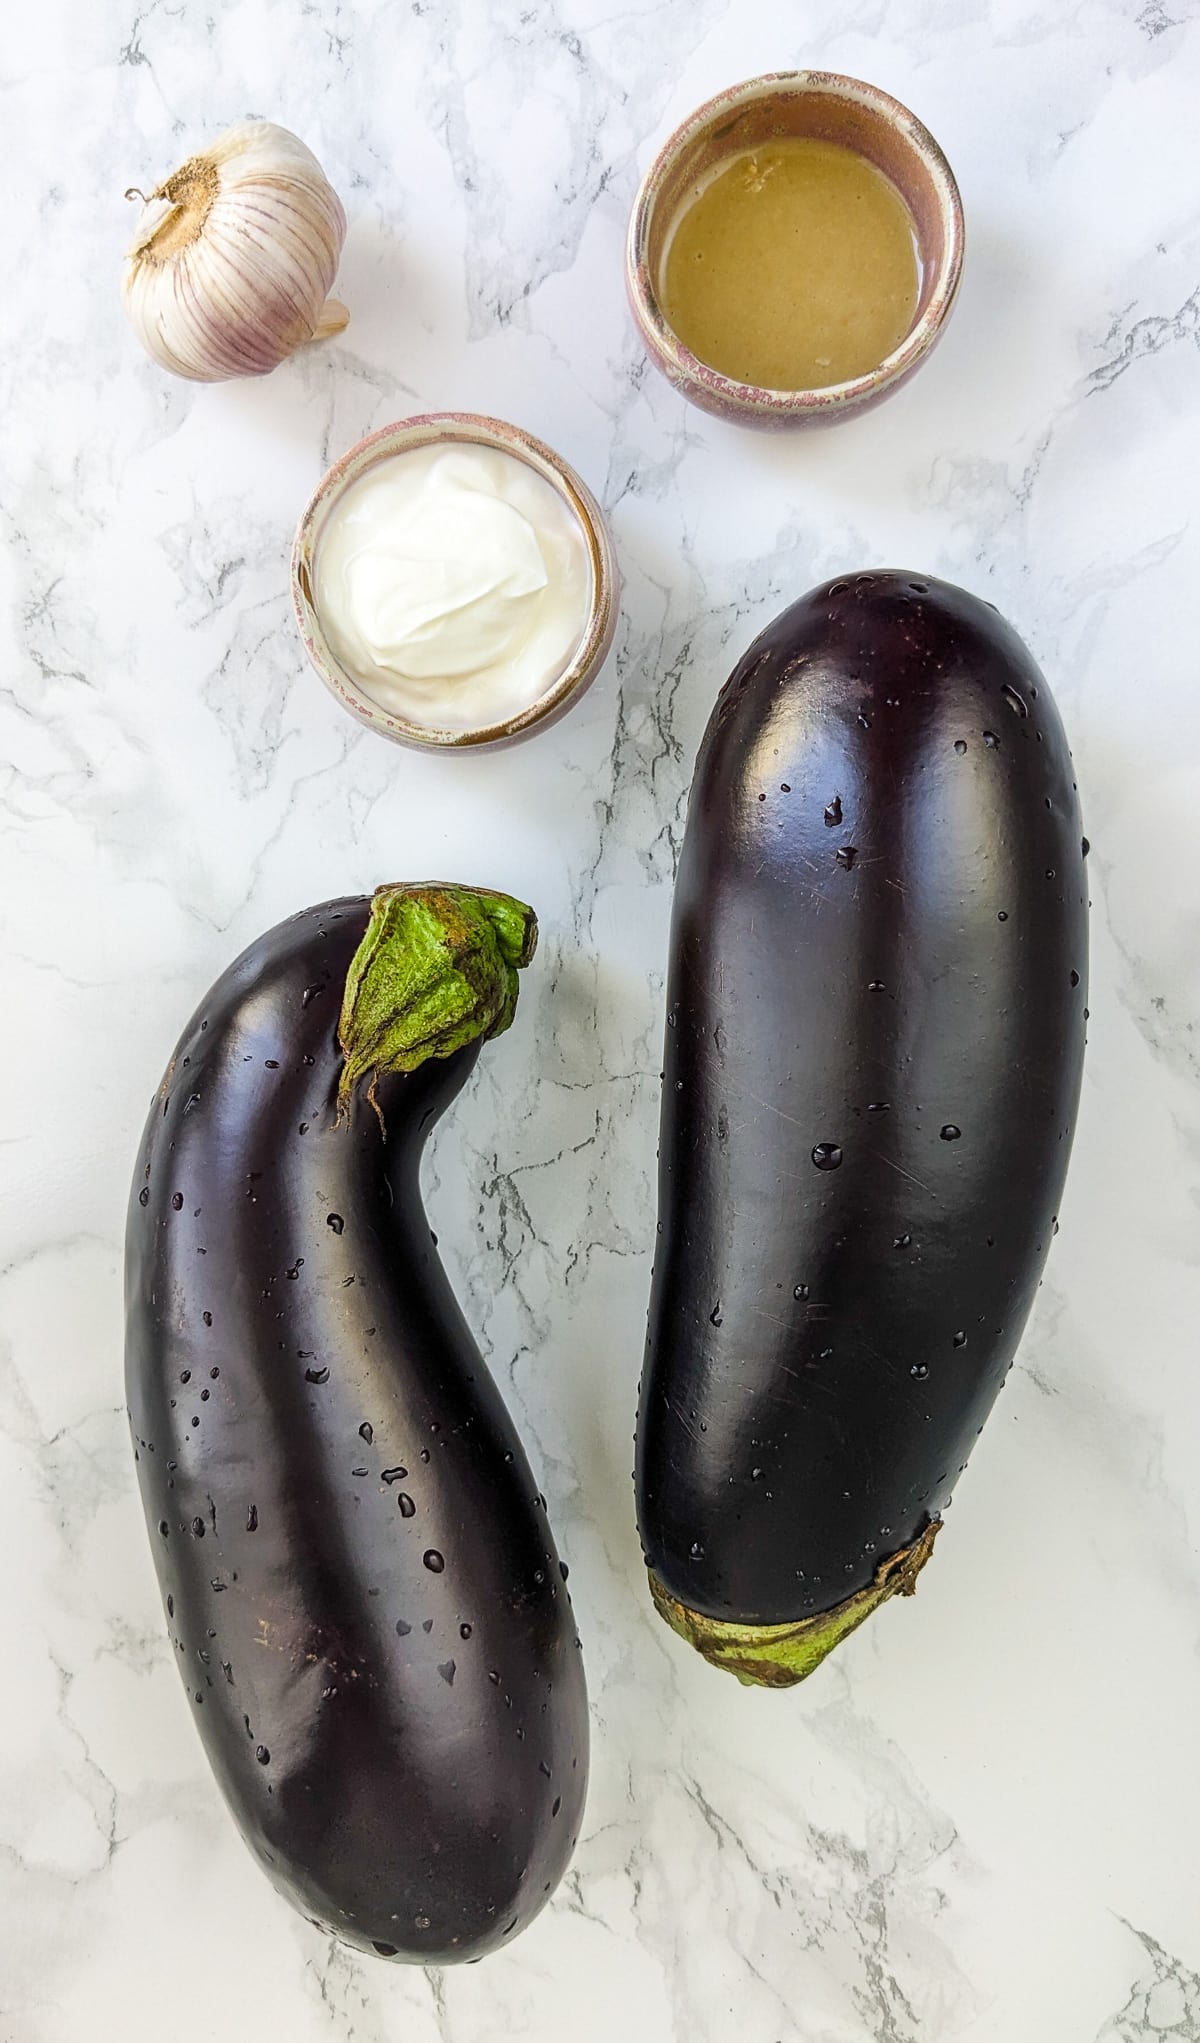 Two eggplants, yogurt and garlic on a white marble table.